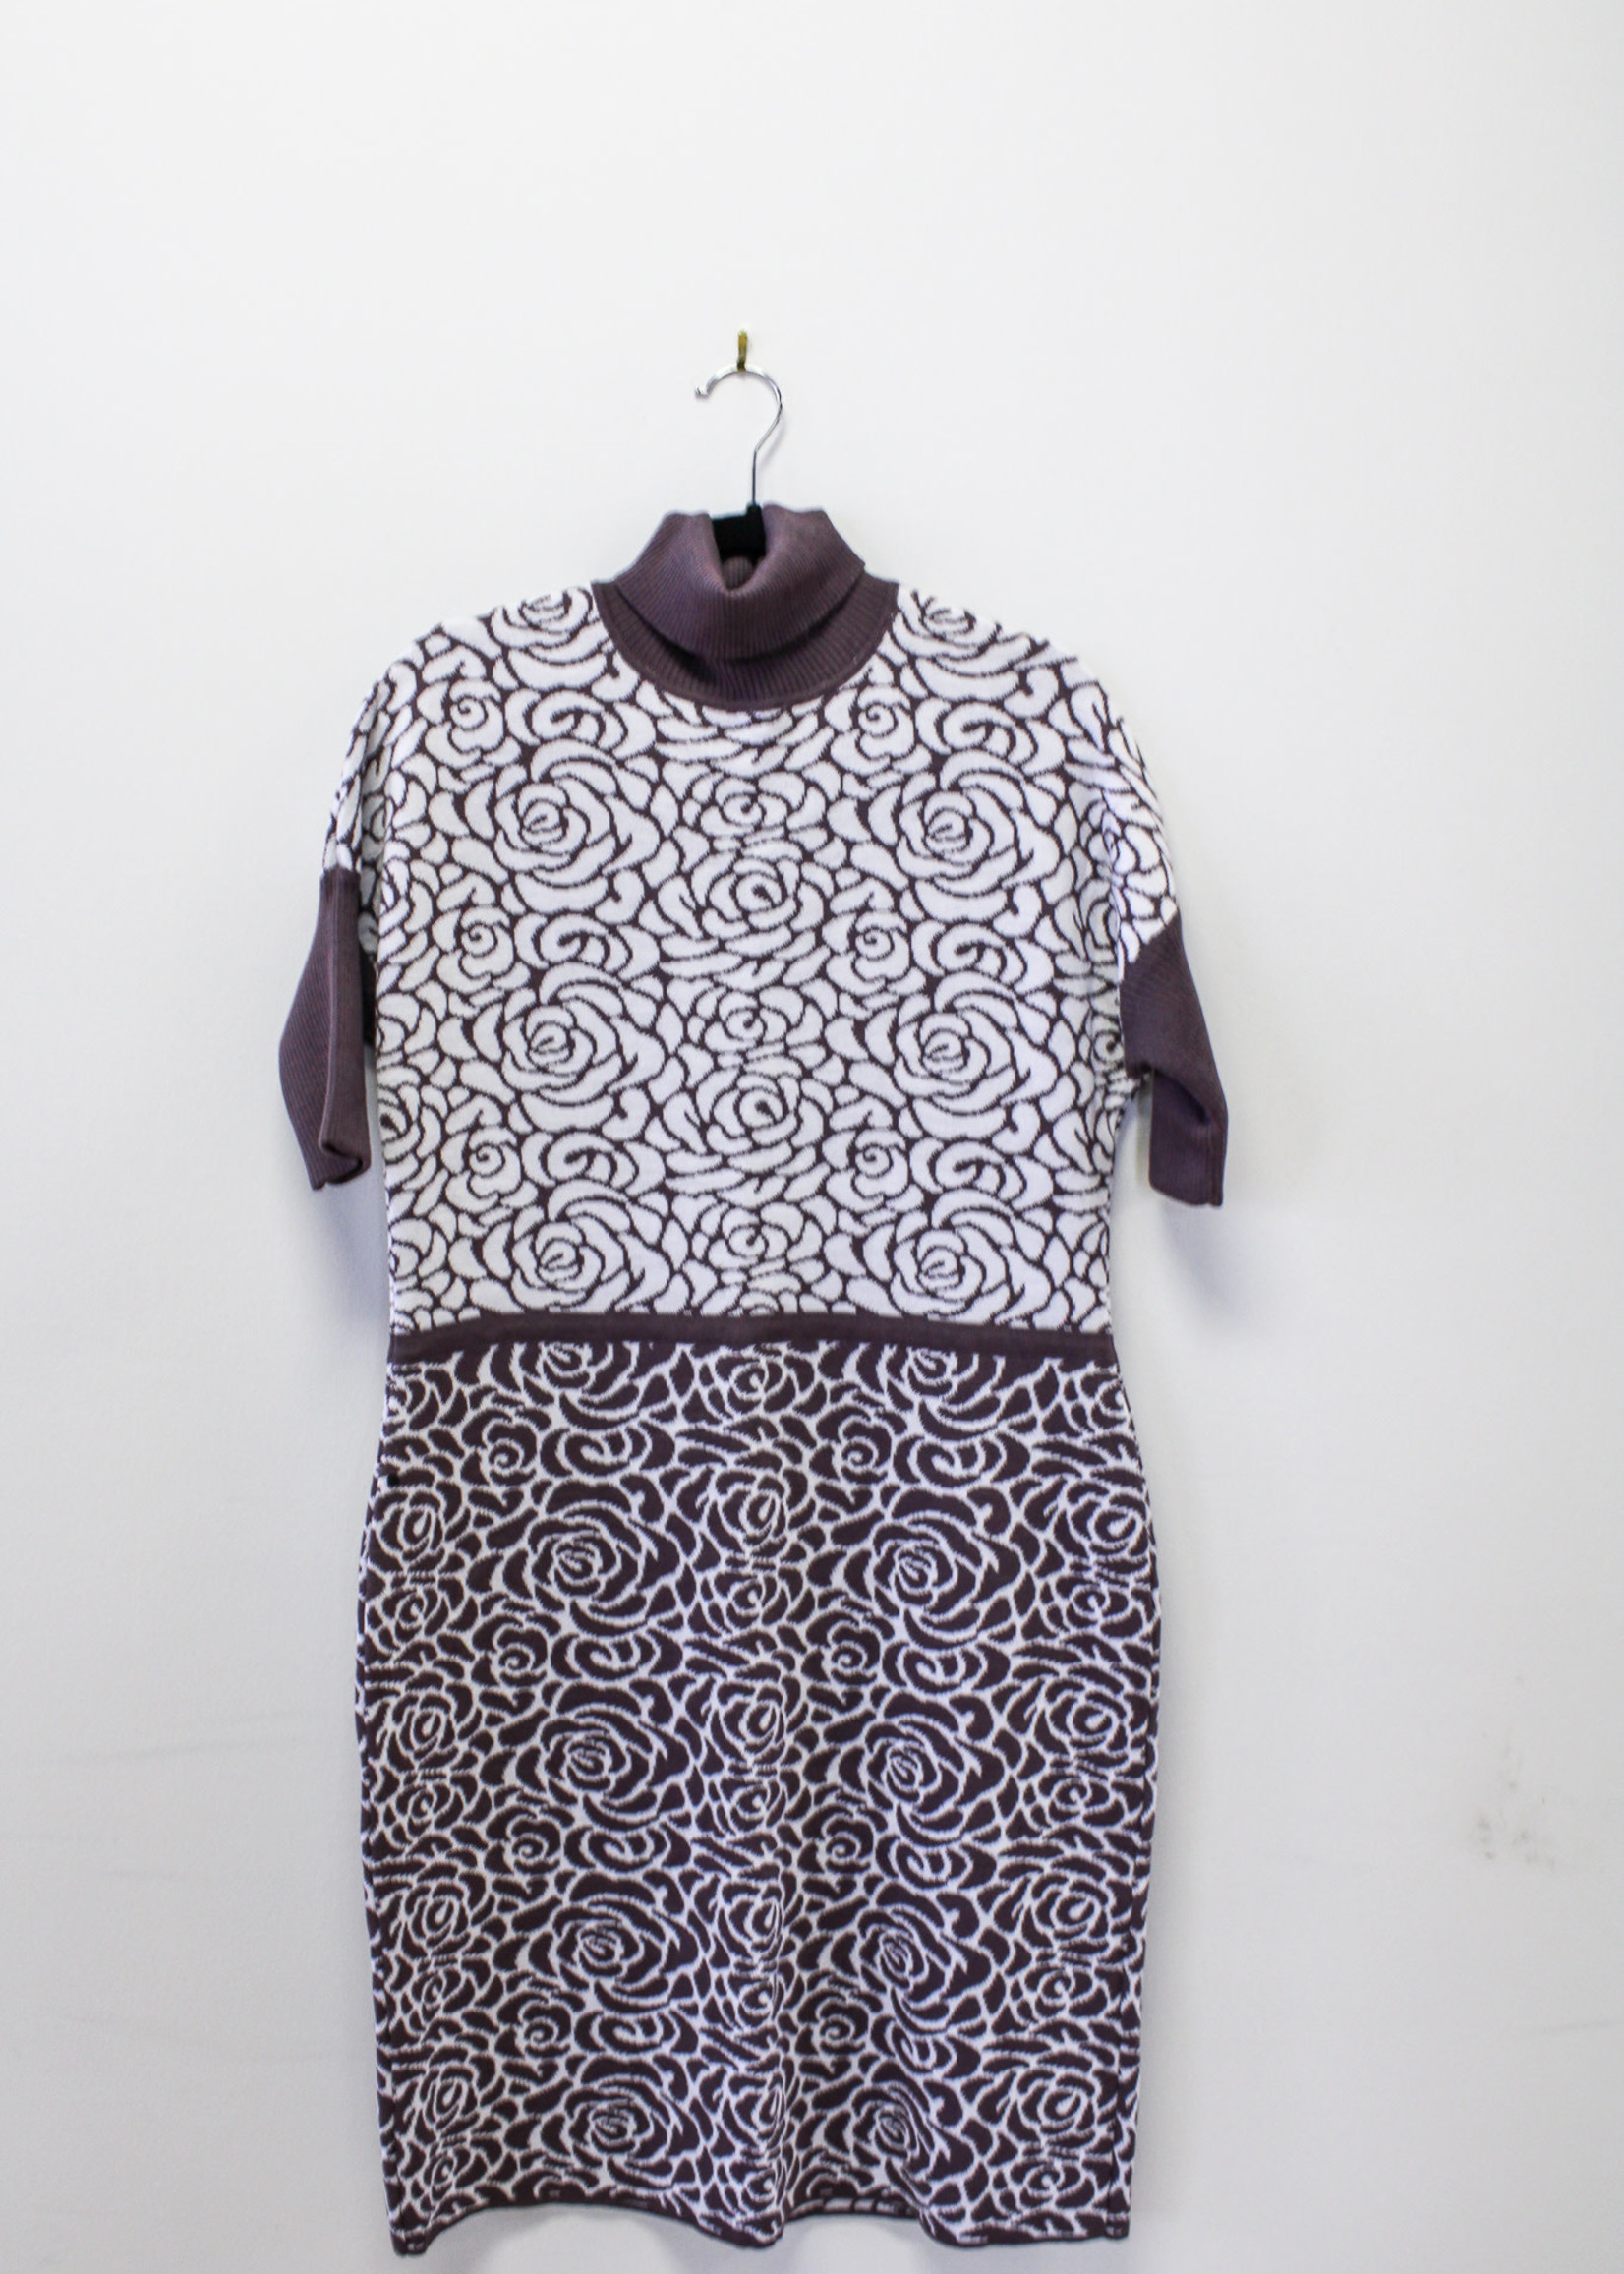 DRESS-Mauve Floral Print Sweater Dress (L)